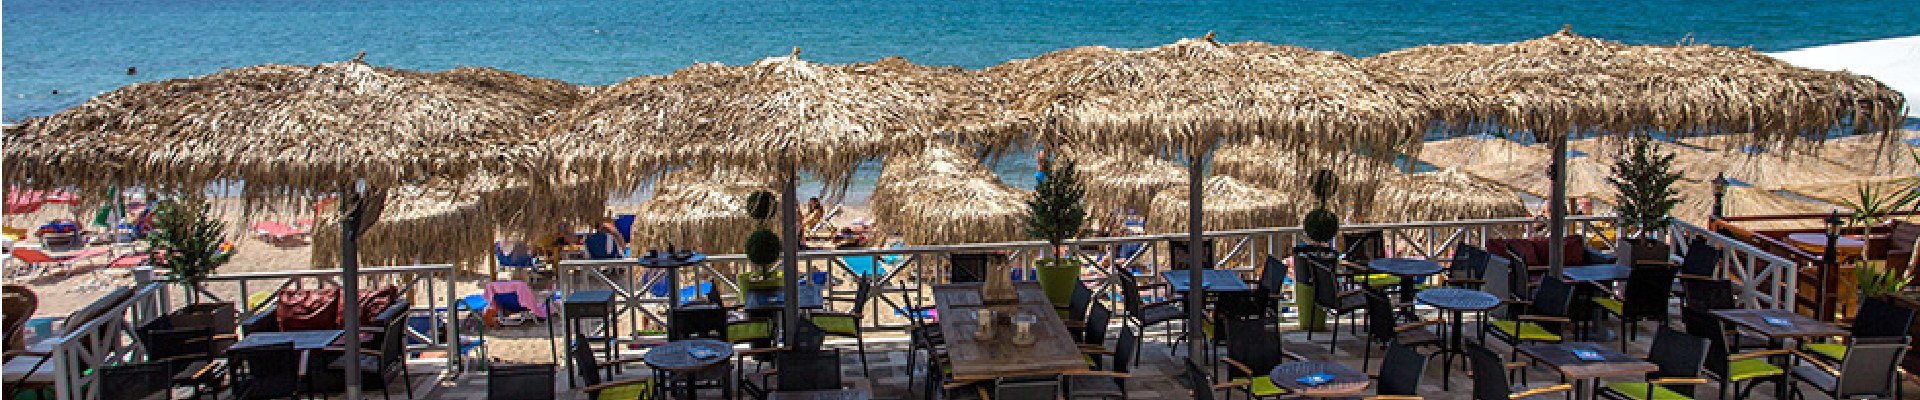 Hotel Thalassies plaža